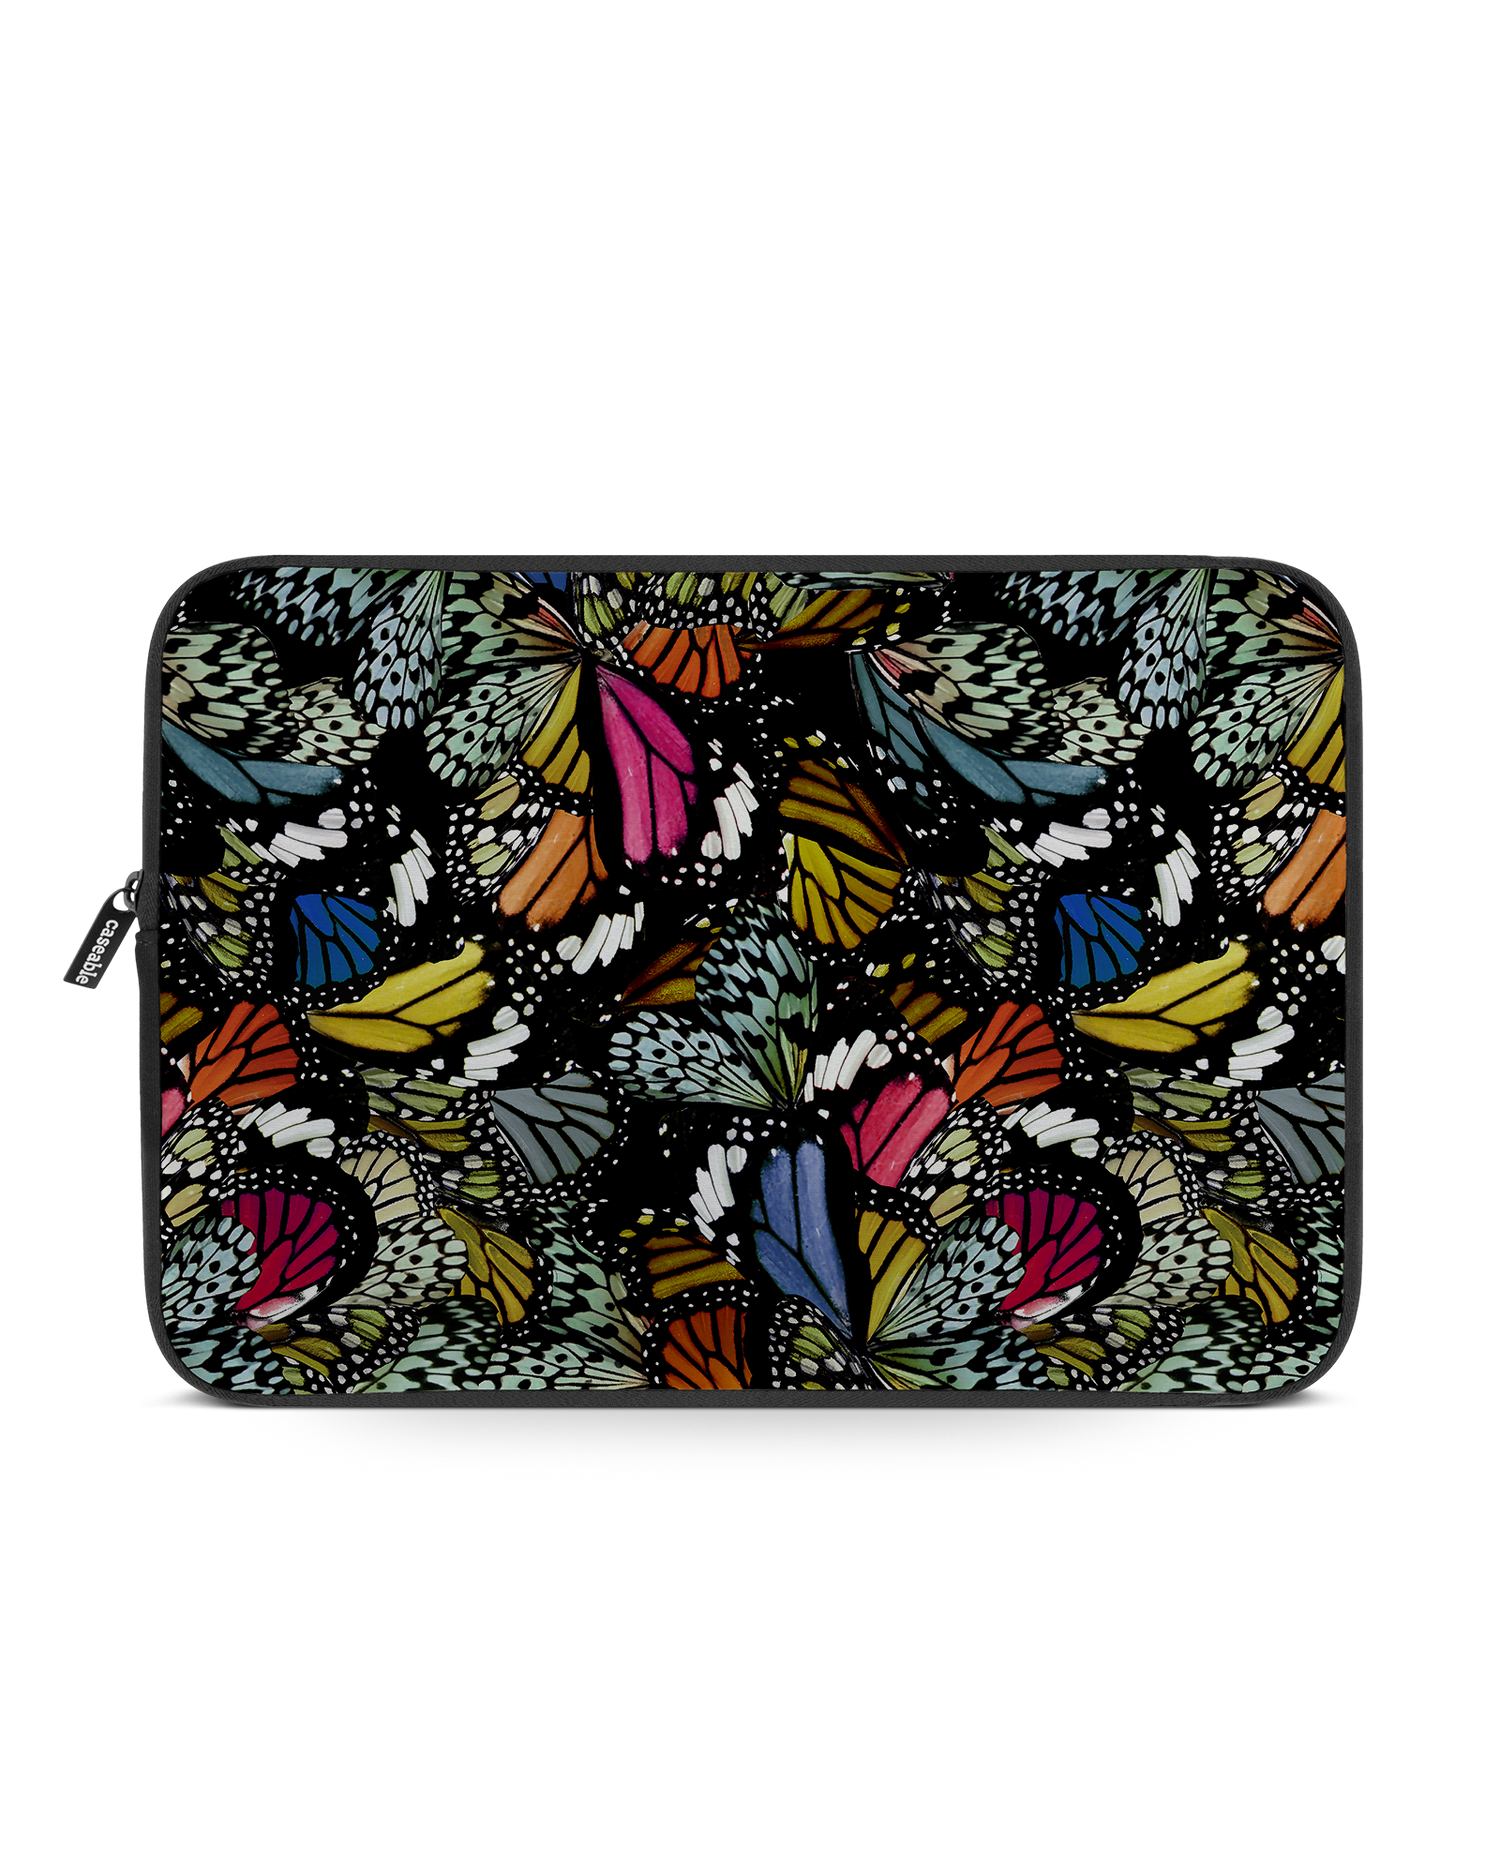 Psychedelic Butterflies Laptophülle 14 Zoll: Vorderansicht